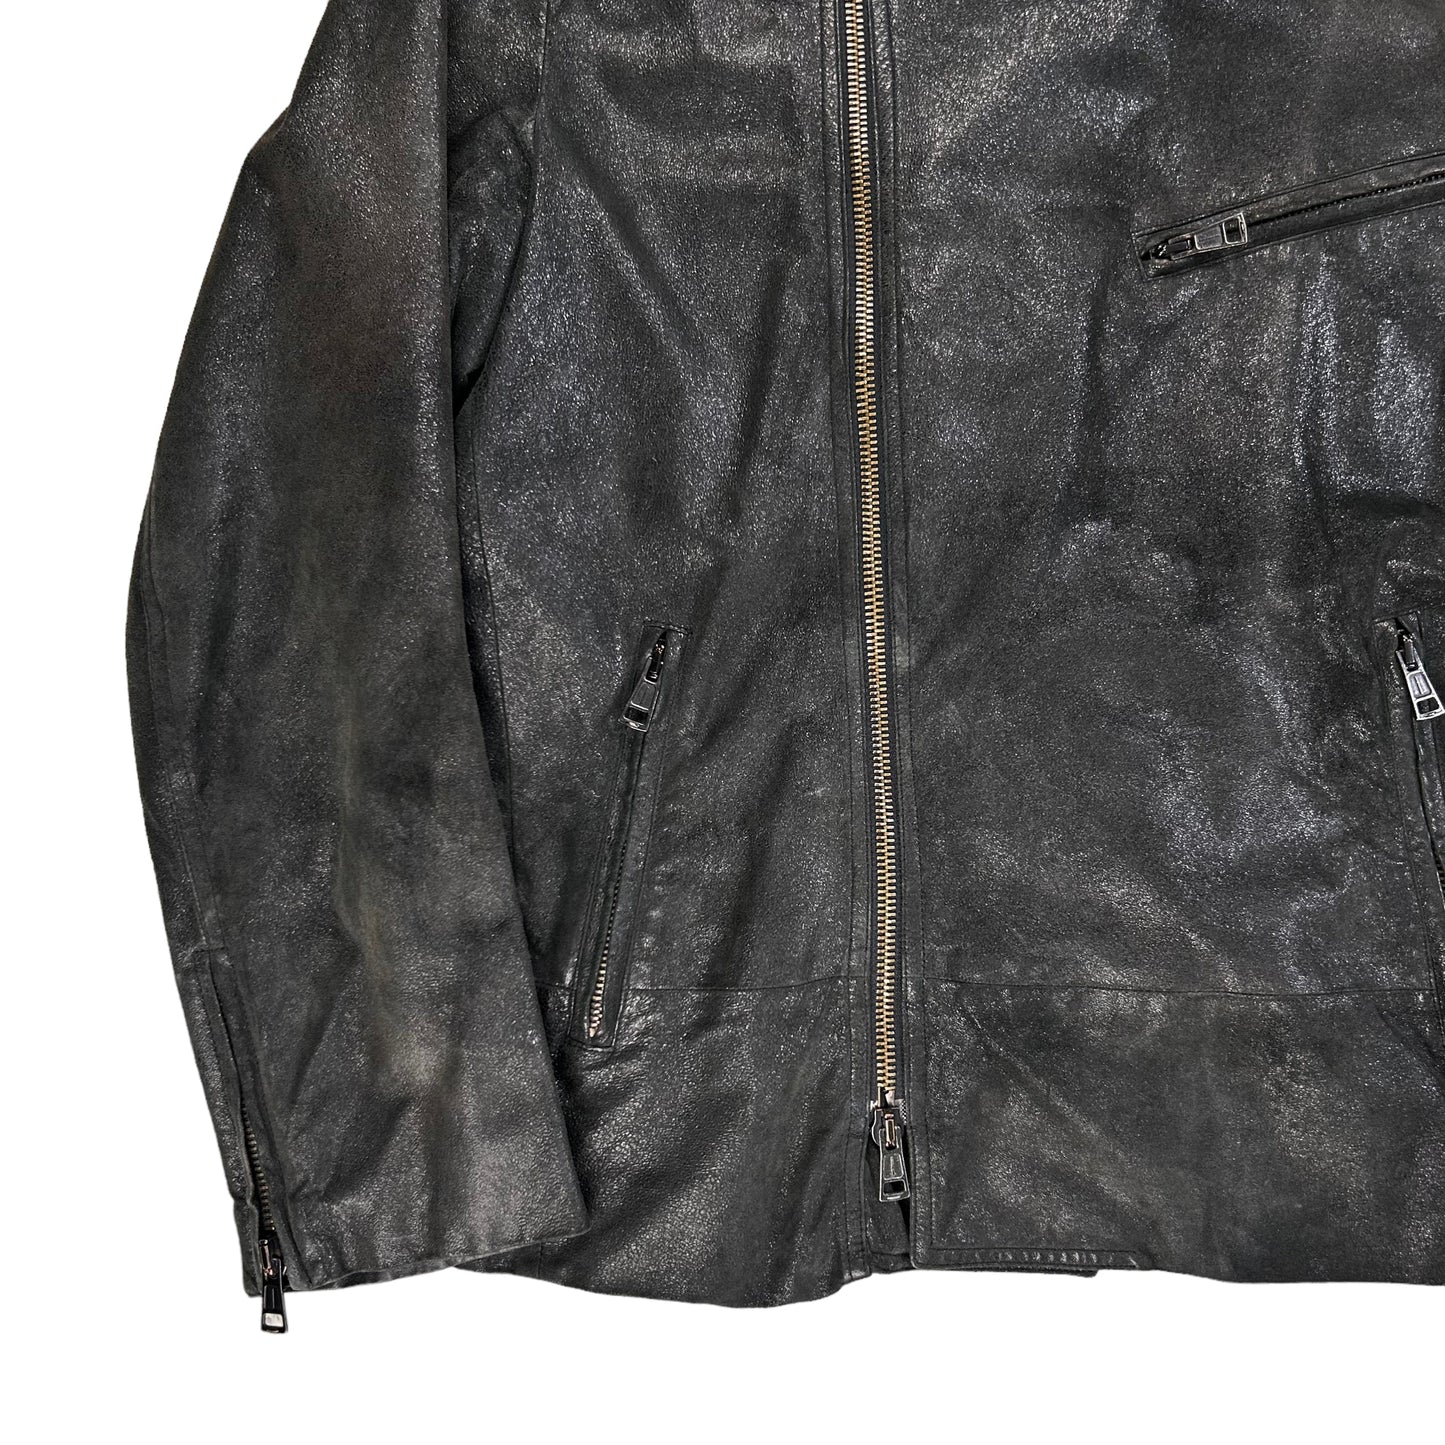 Ann Demeulemeester Biker Leather Jacket - AW11